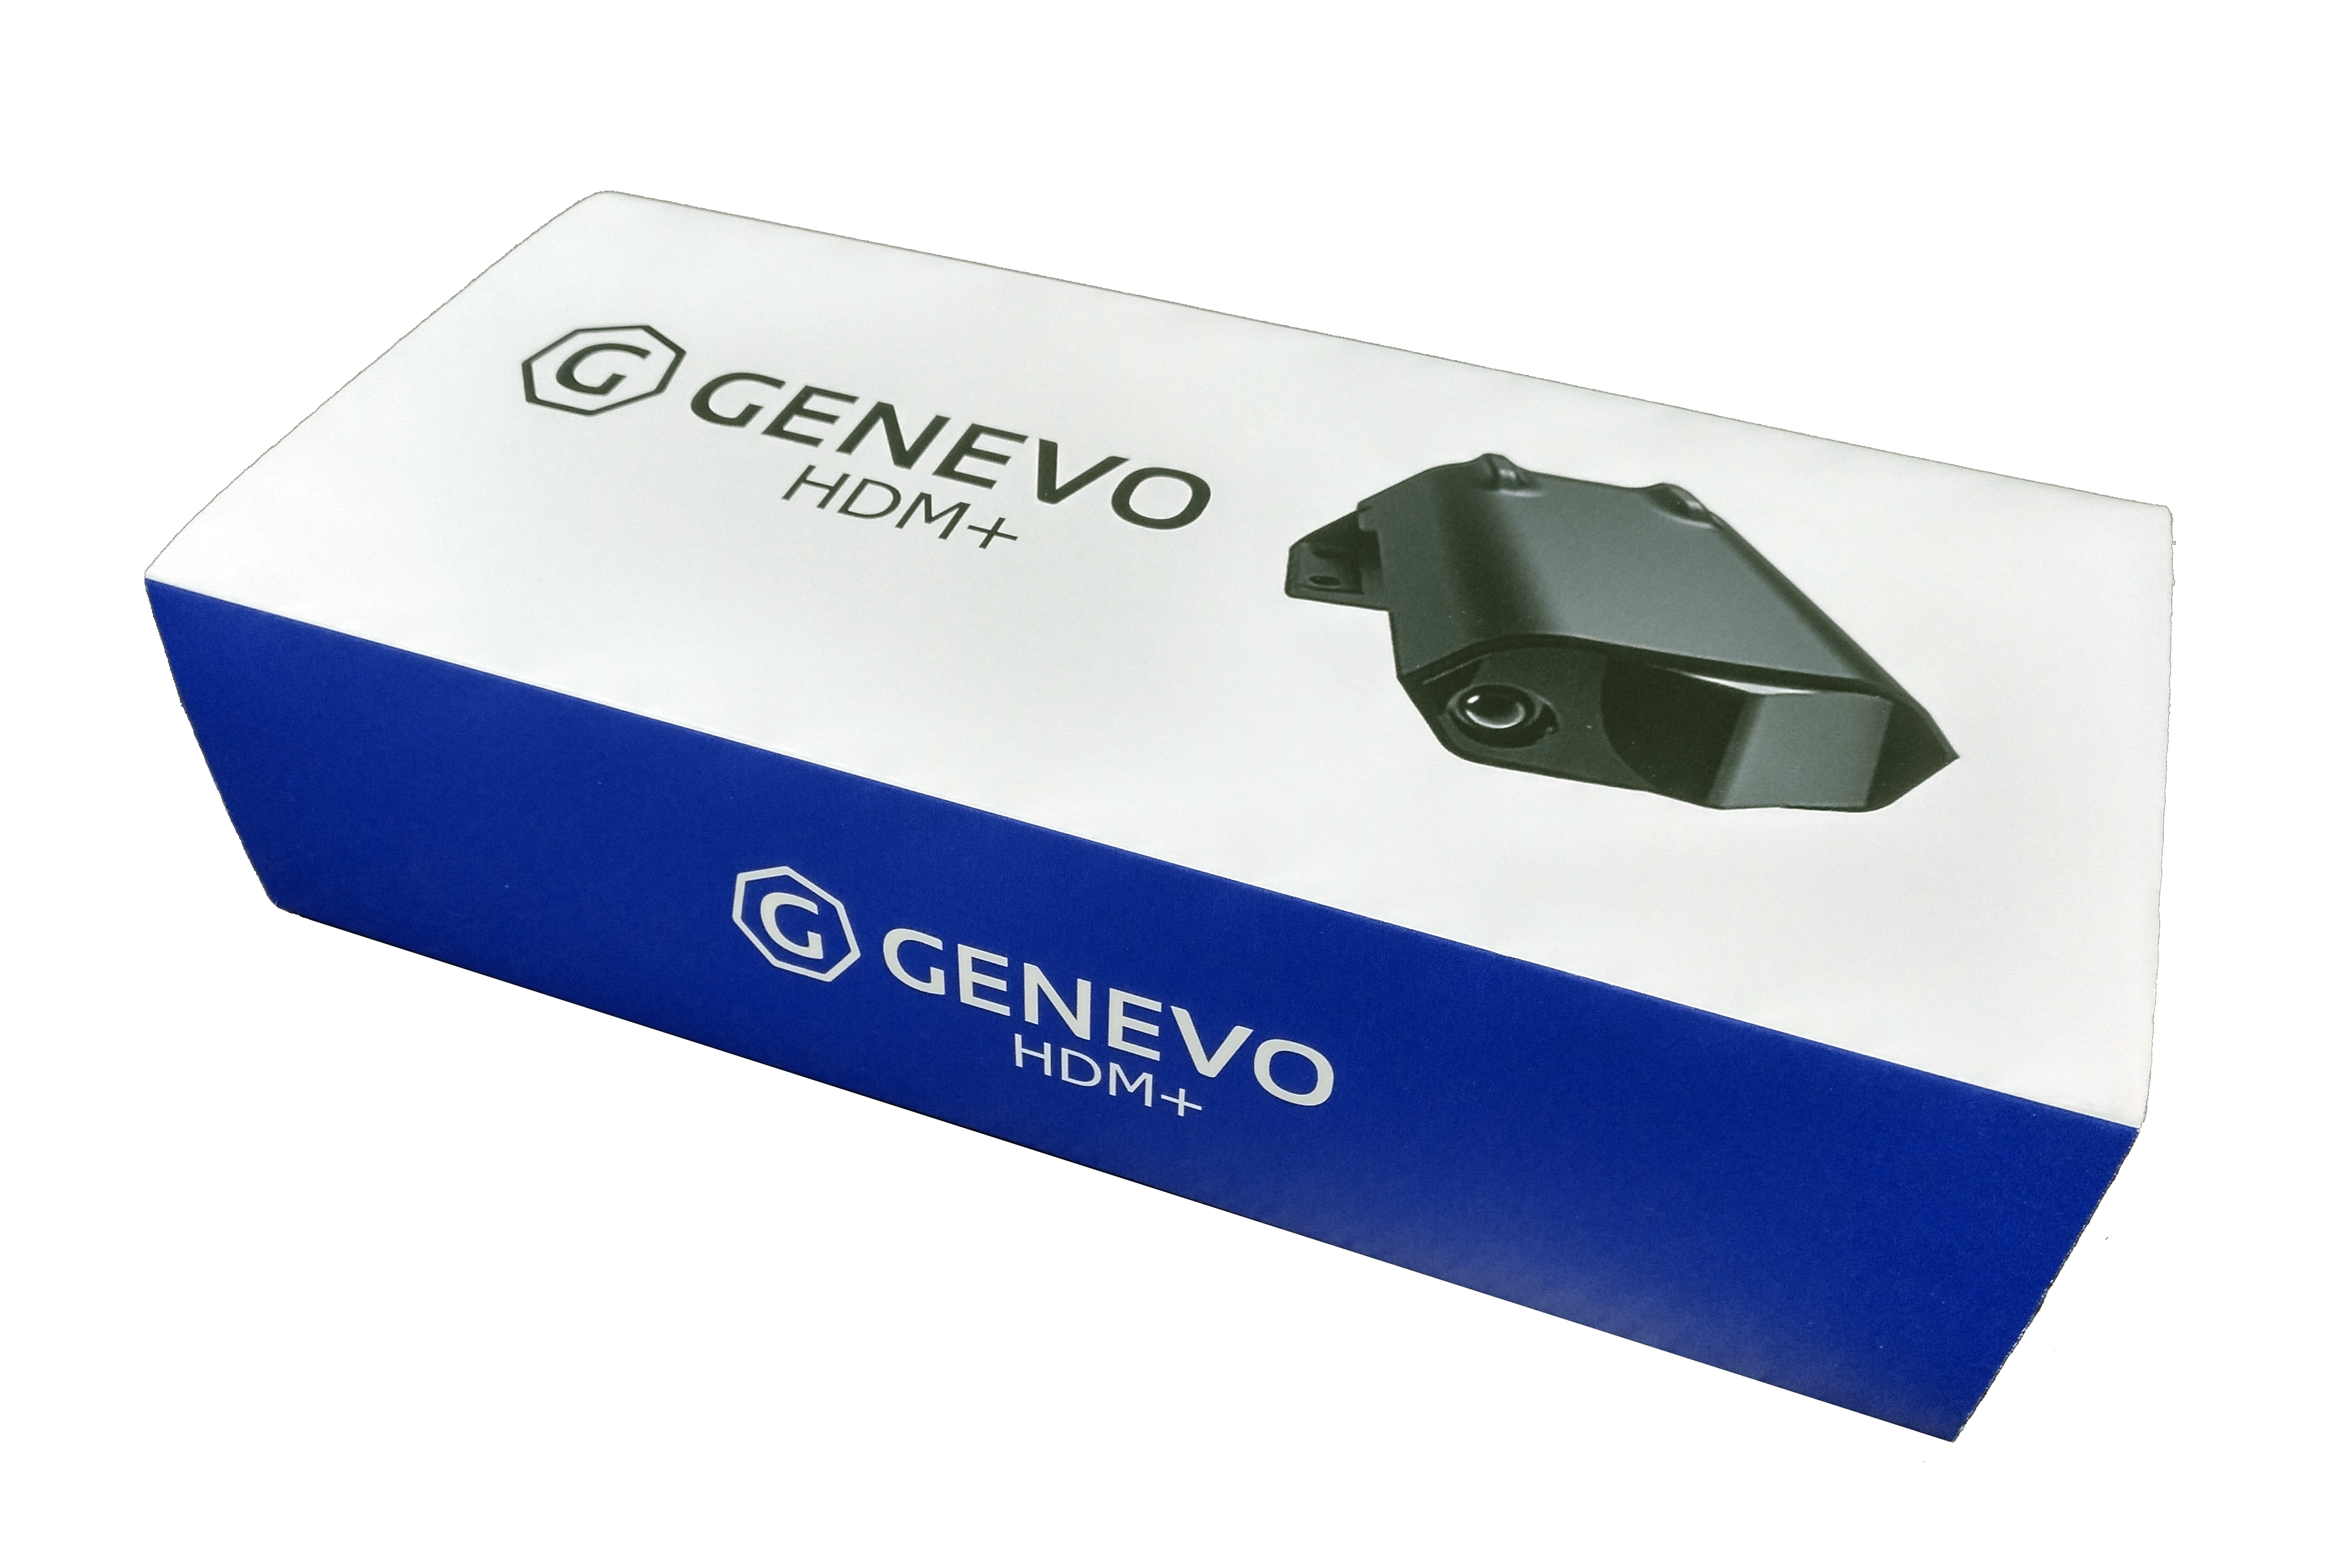 Detector de radar antiradar Genevo HDM+ caja